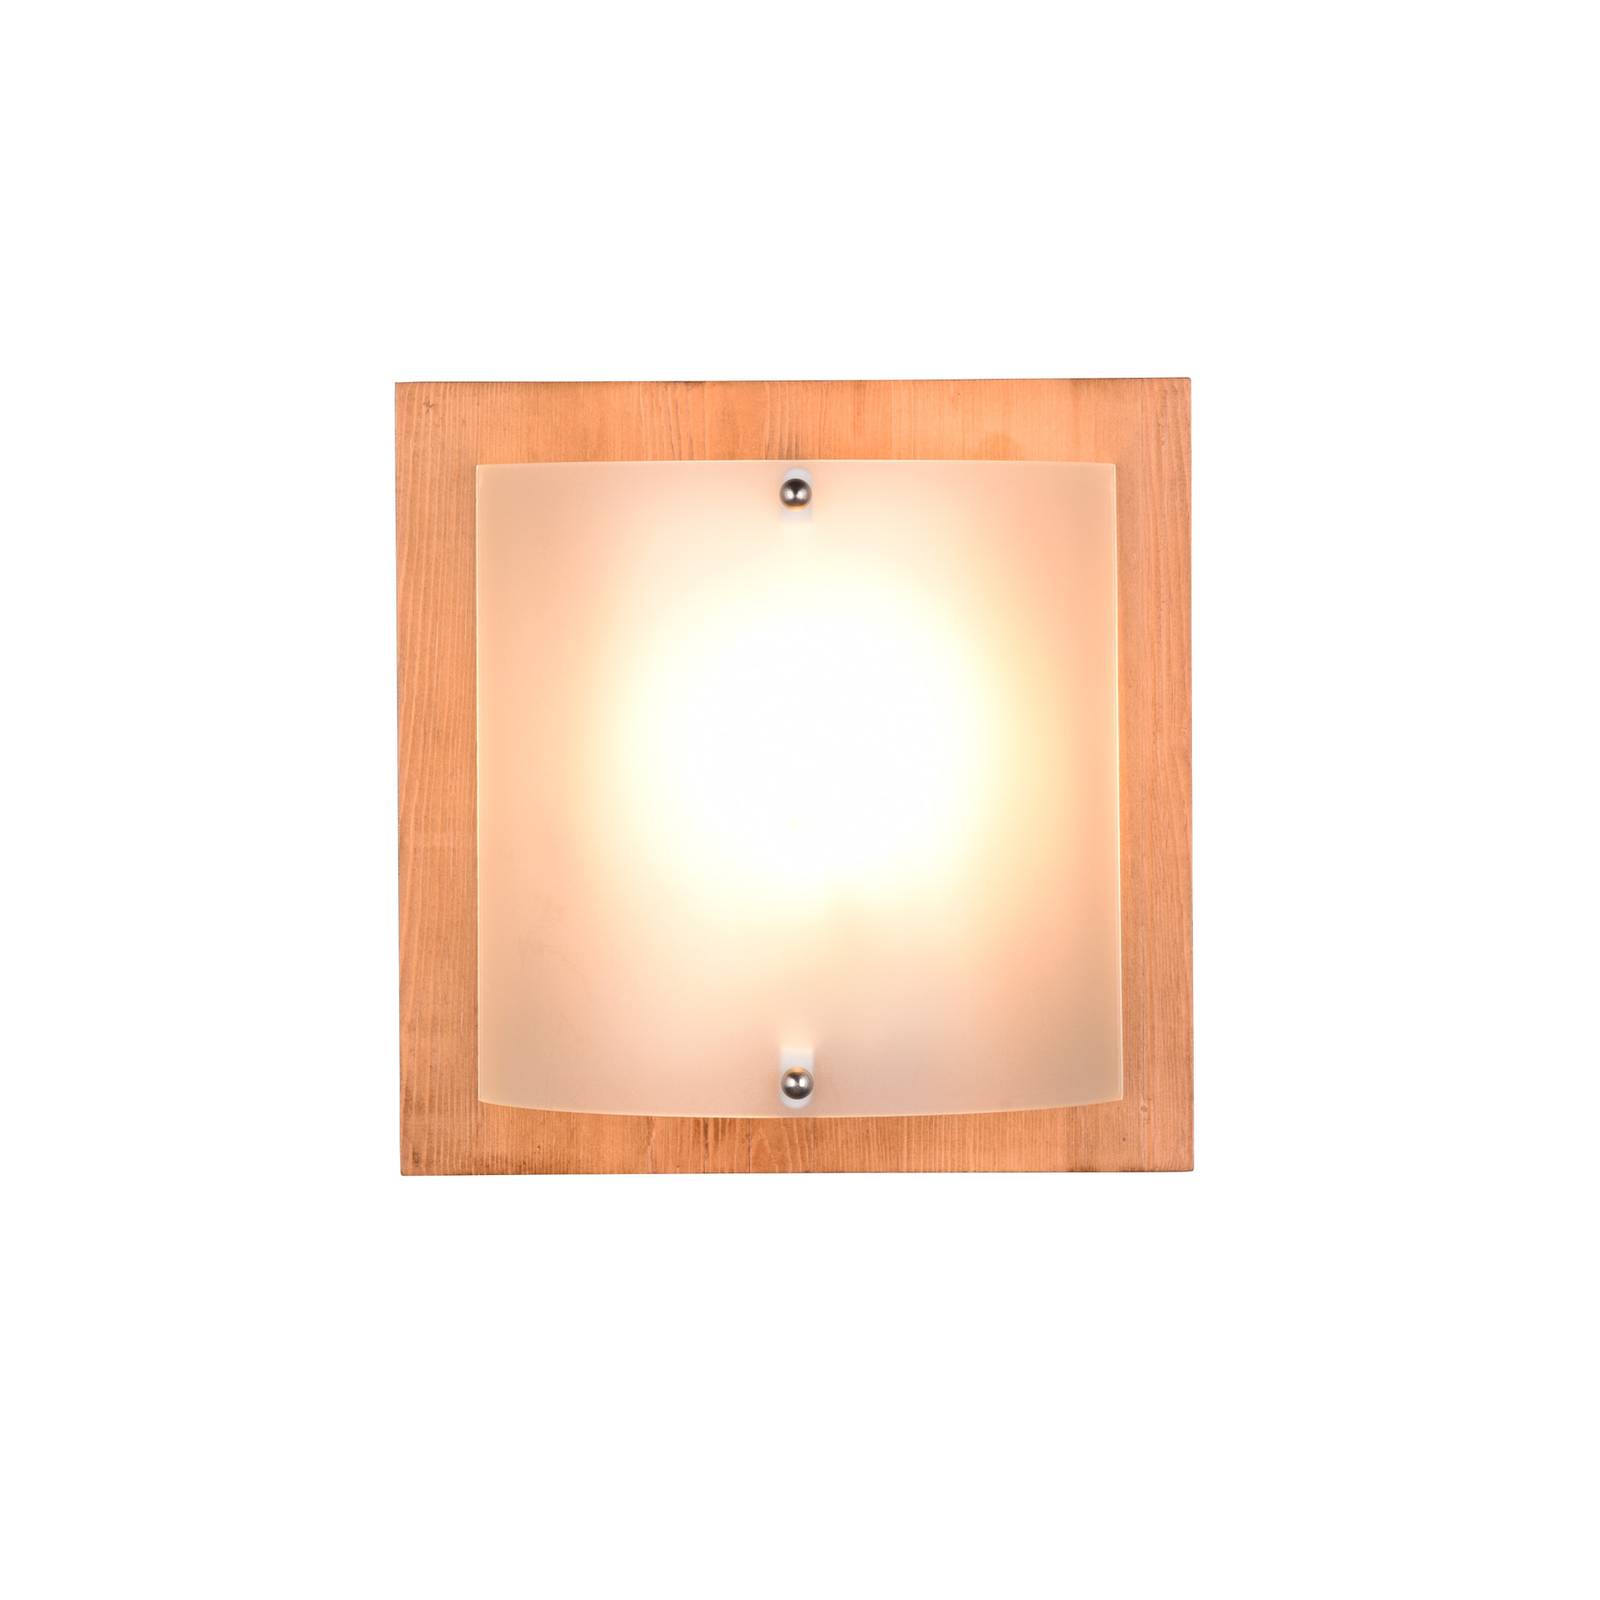 Trio Lighting Pali wall light, light wood/white, height 25 cm